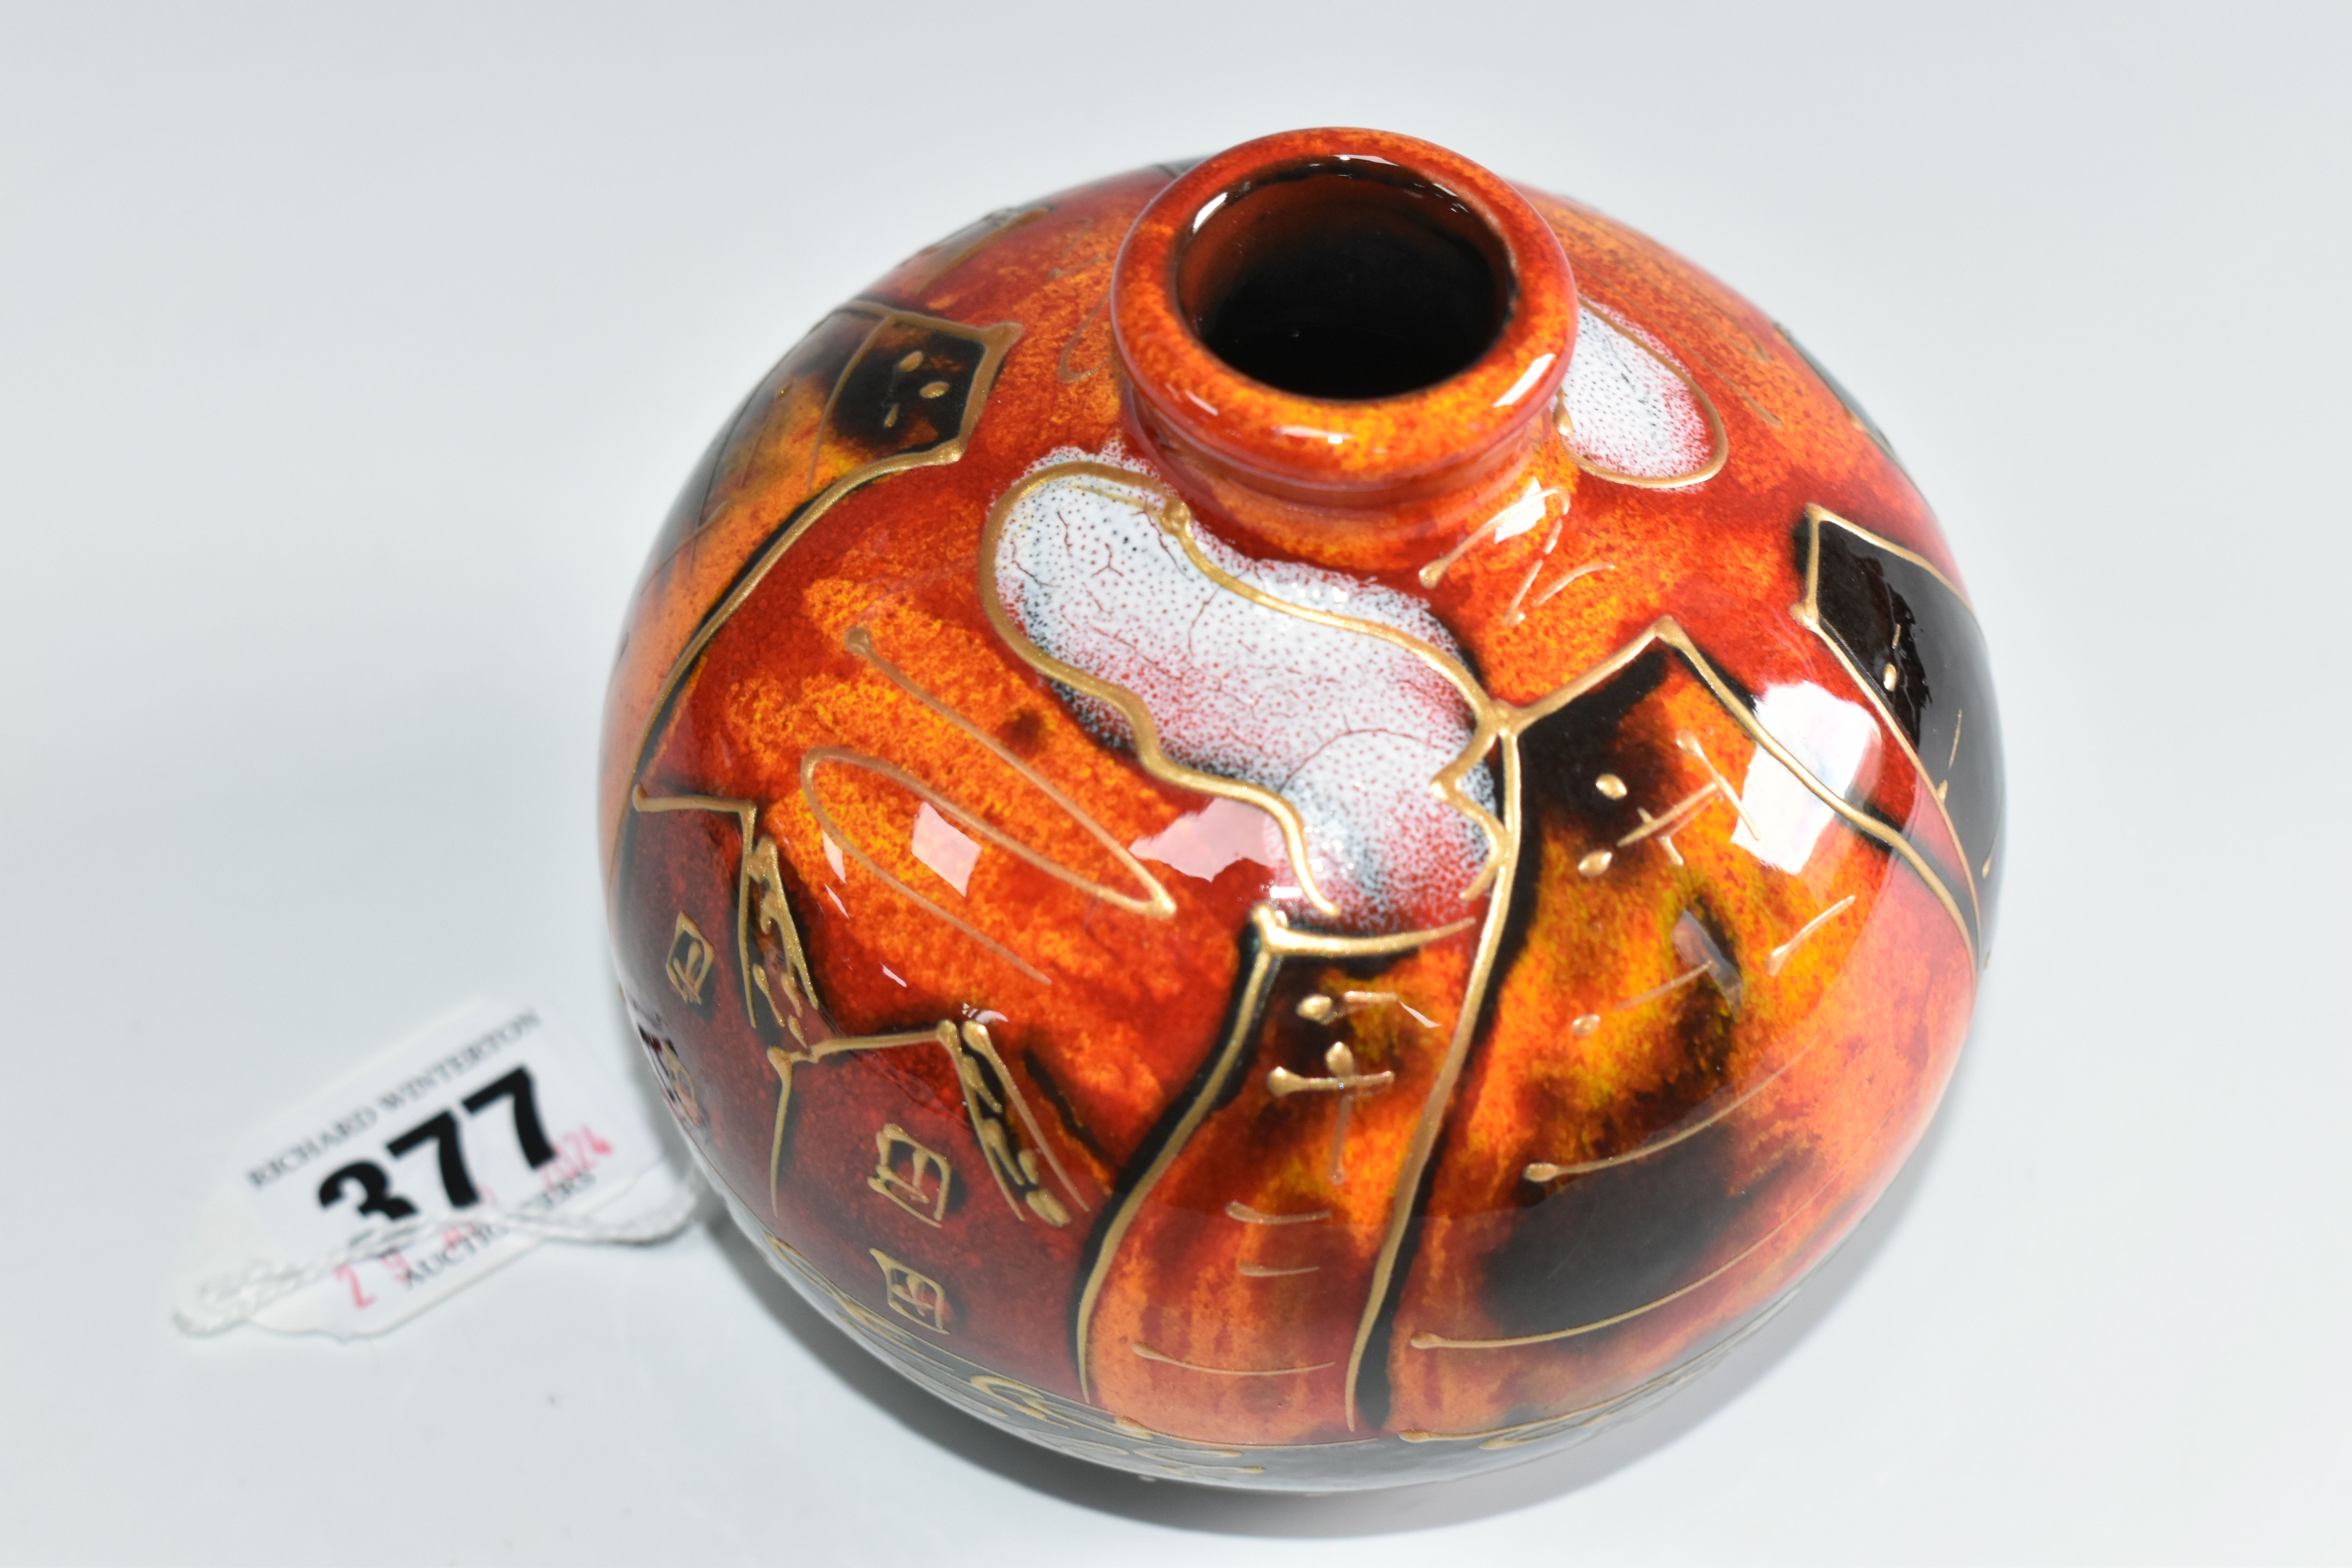 AN ANITA HARRIS ART POTTERY BULBOUS VASE, hand painted black and orange Potteries design, gilt - Image 4 of 5